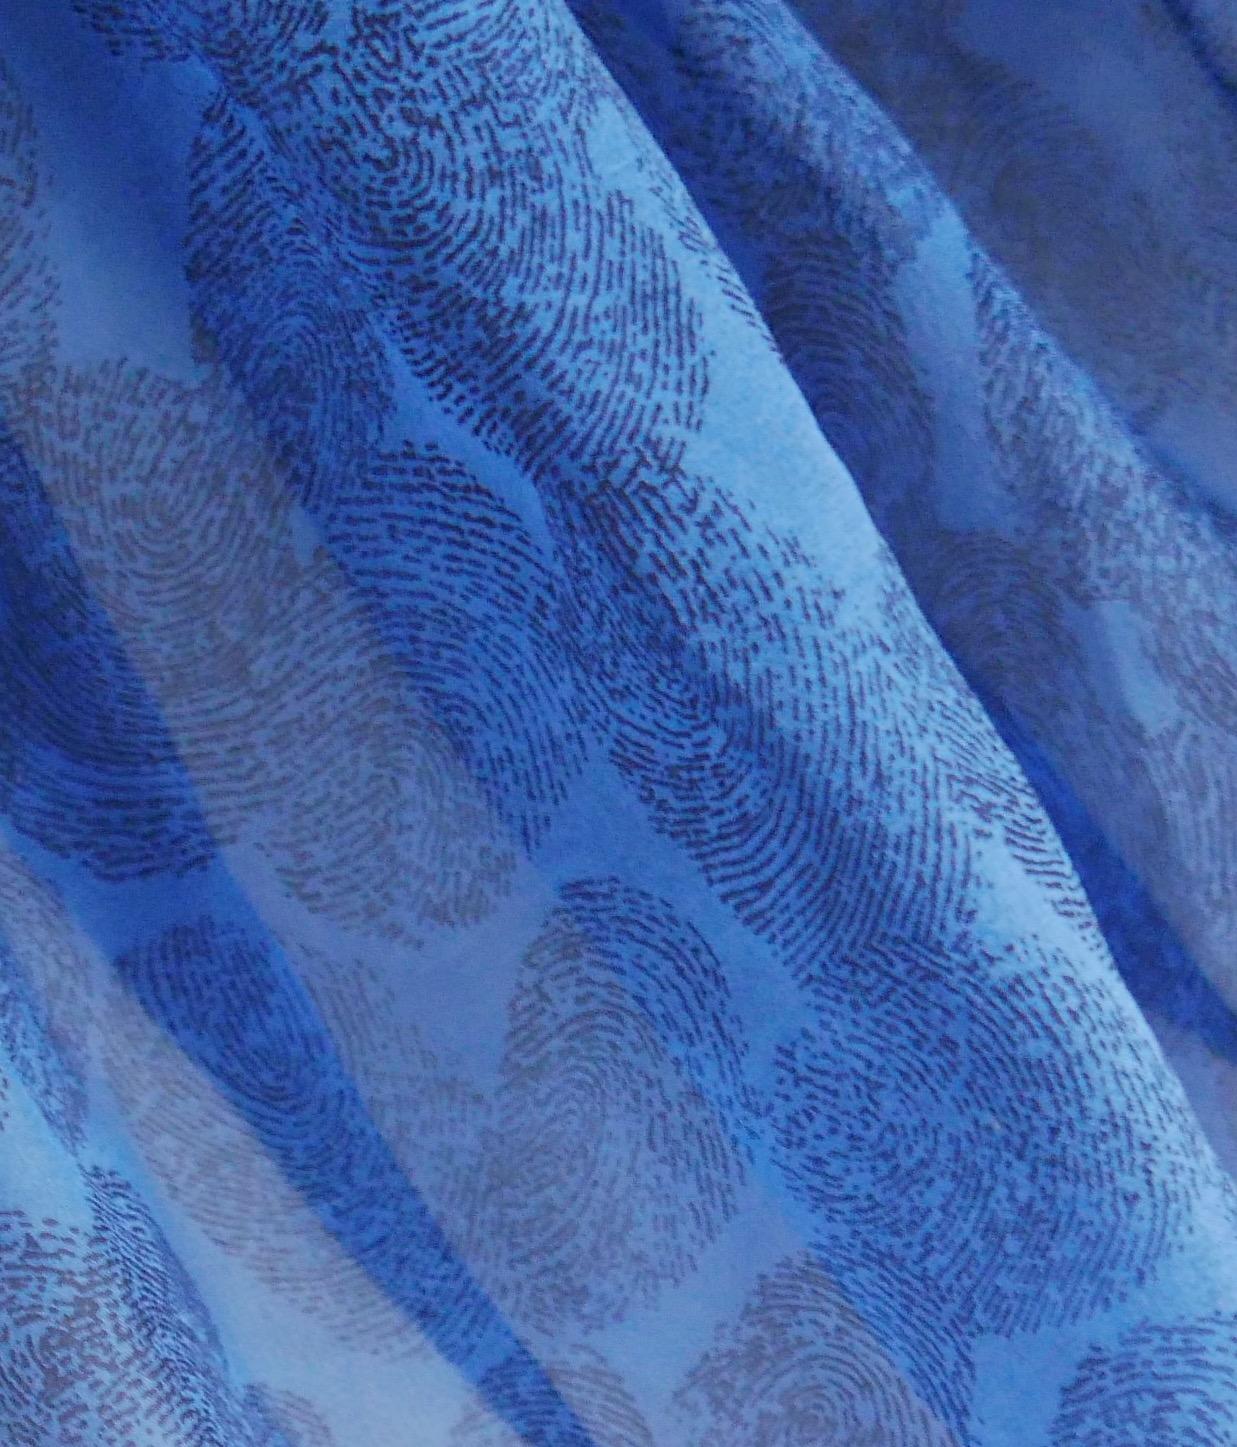 Yves Saint Laurent x Stefano Pilati SS11 Fingerprint Silk Halter Top Blouse In New Condition For Sale In London, GB